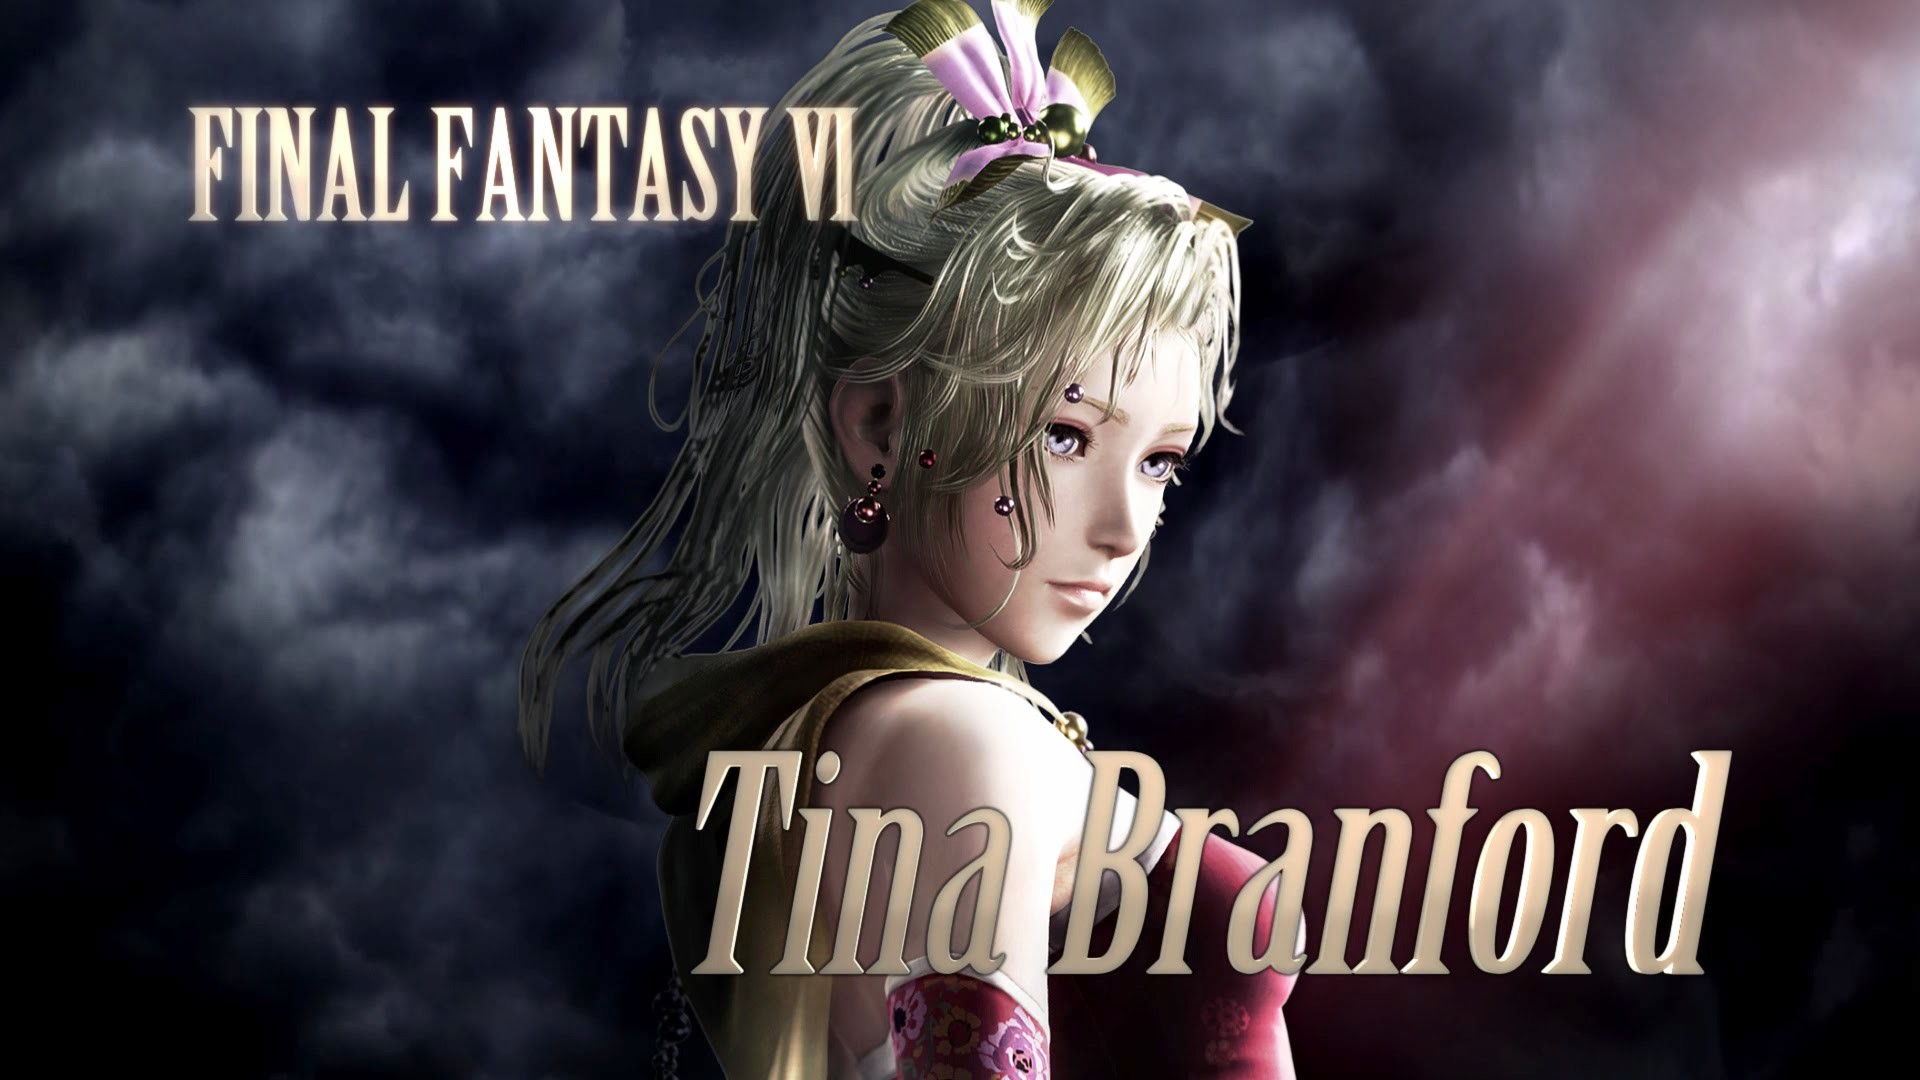 Tina highlights the latest Dissidia Final Fantasy trailer